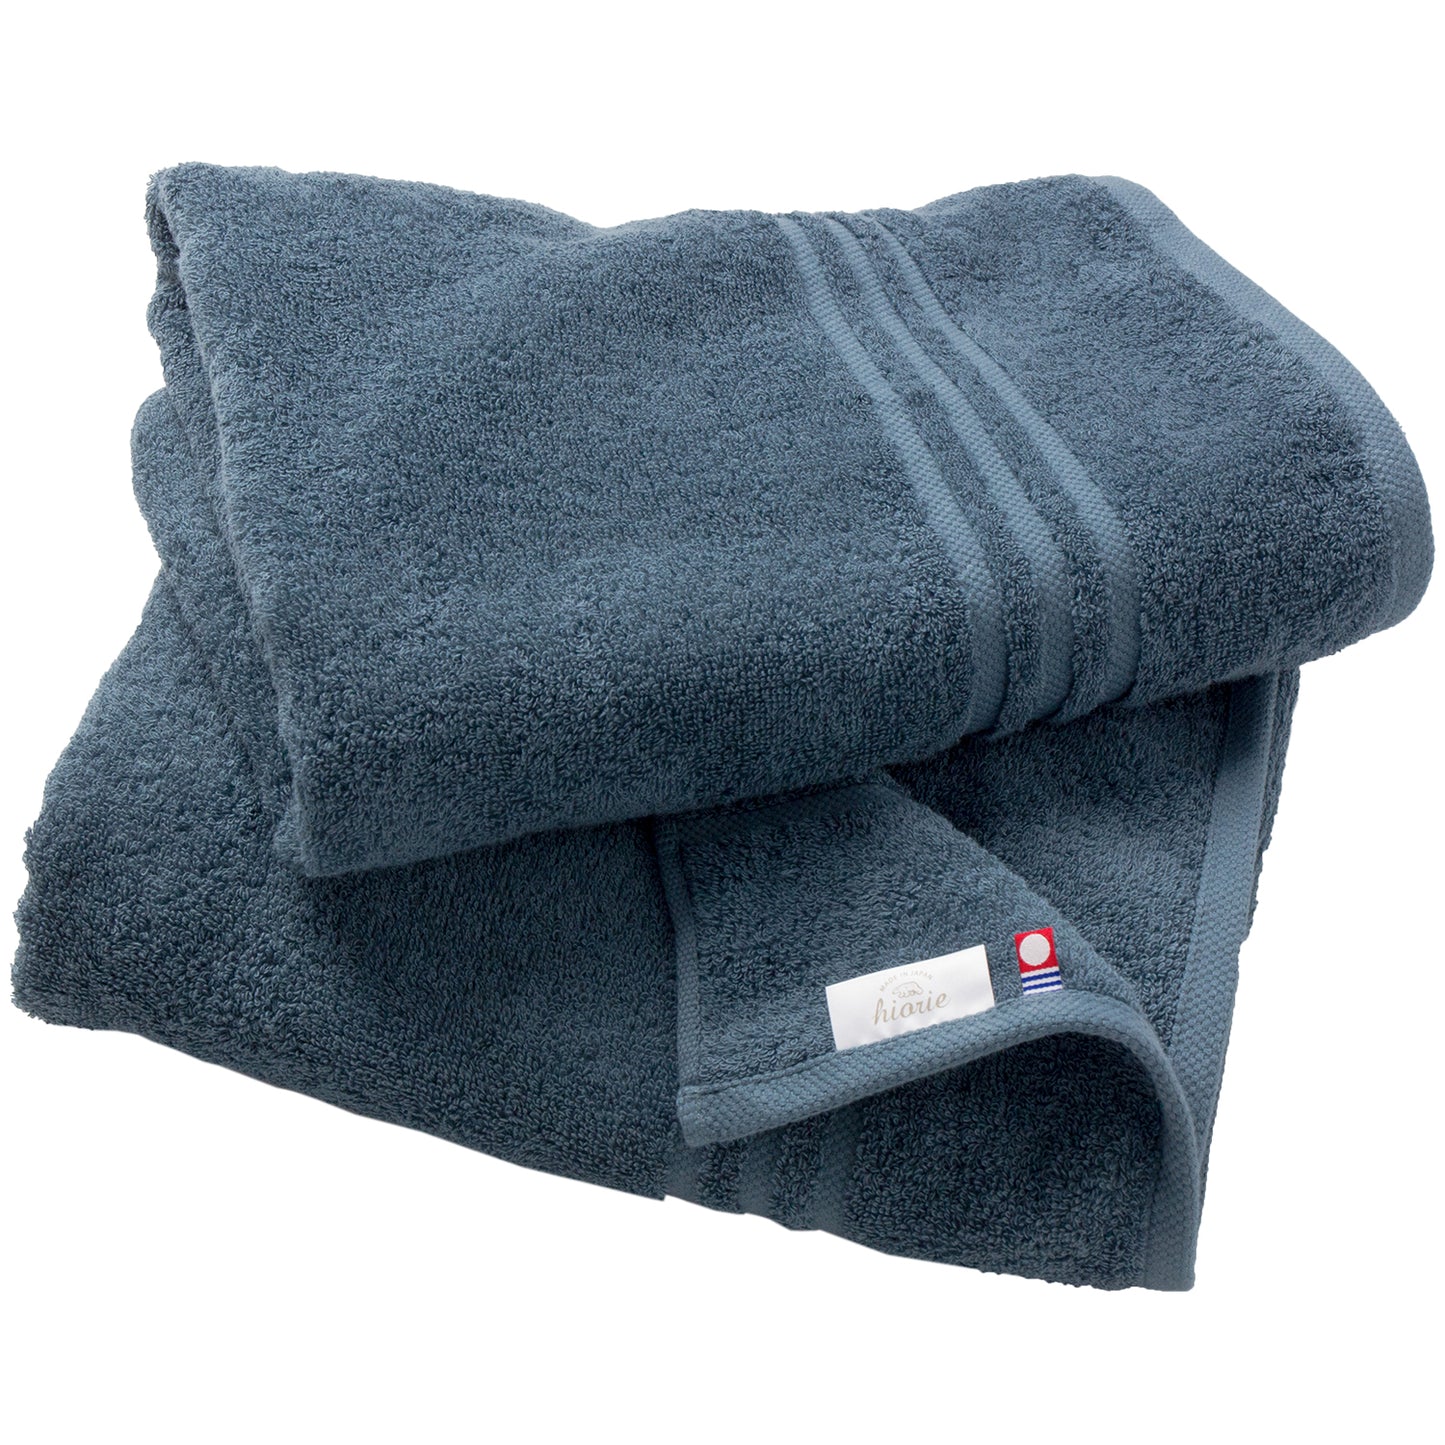 Hiorie Imabari Towel Soft Hotel's Fluffy Bath Towel 2 Sheets 100% cotton Japan